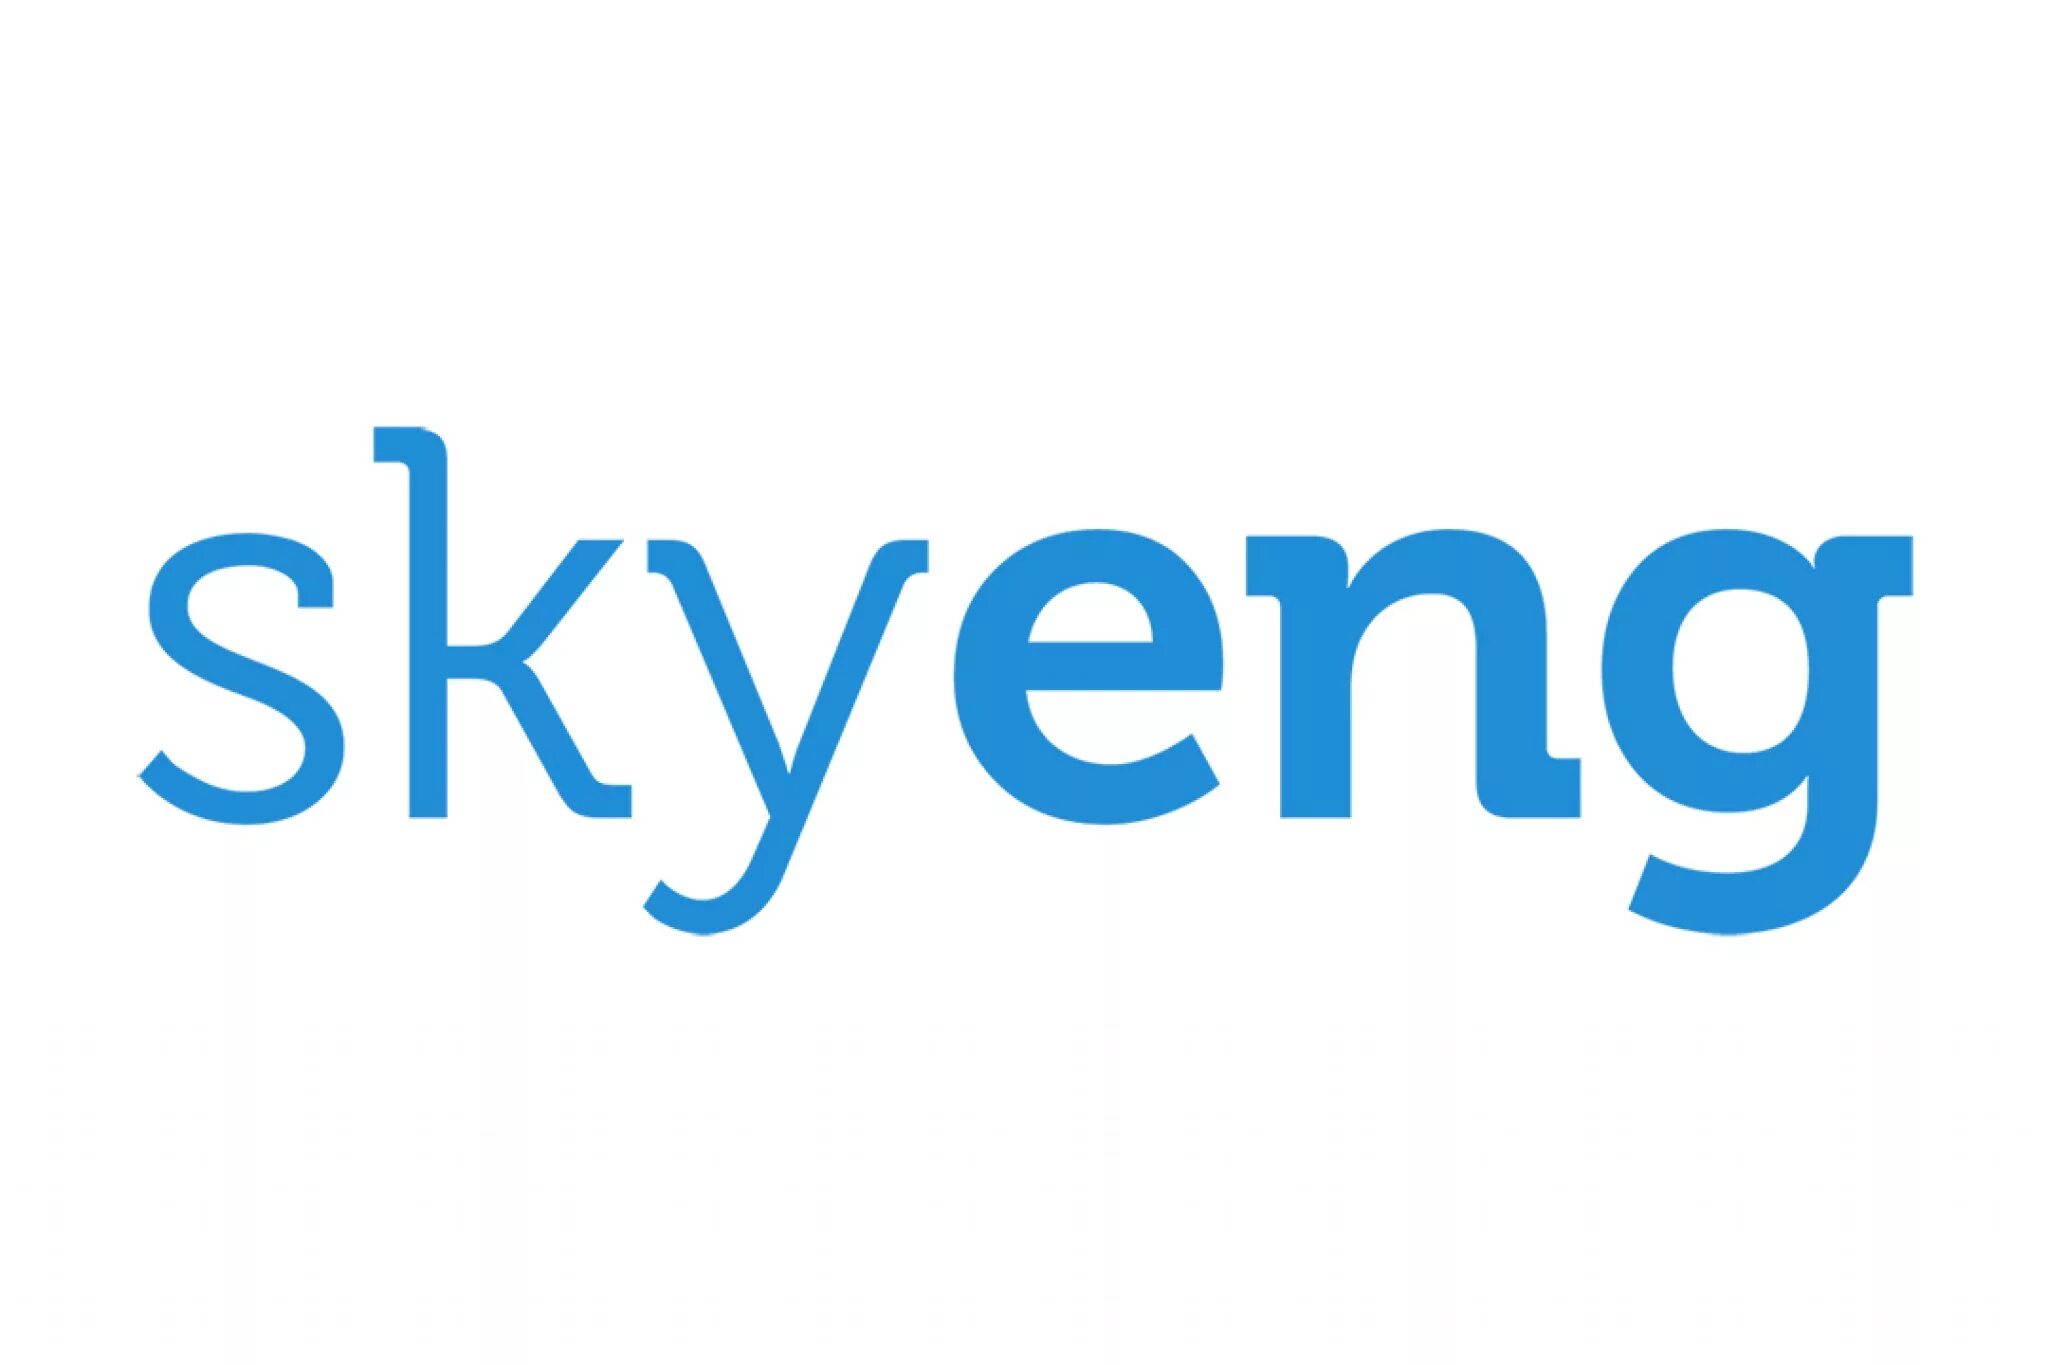 Sky eng. Skyeng. Скаенг лого. Значок Skyeng. Skyeng логотип прозрачный фон.